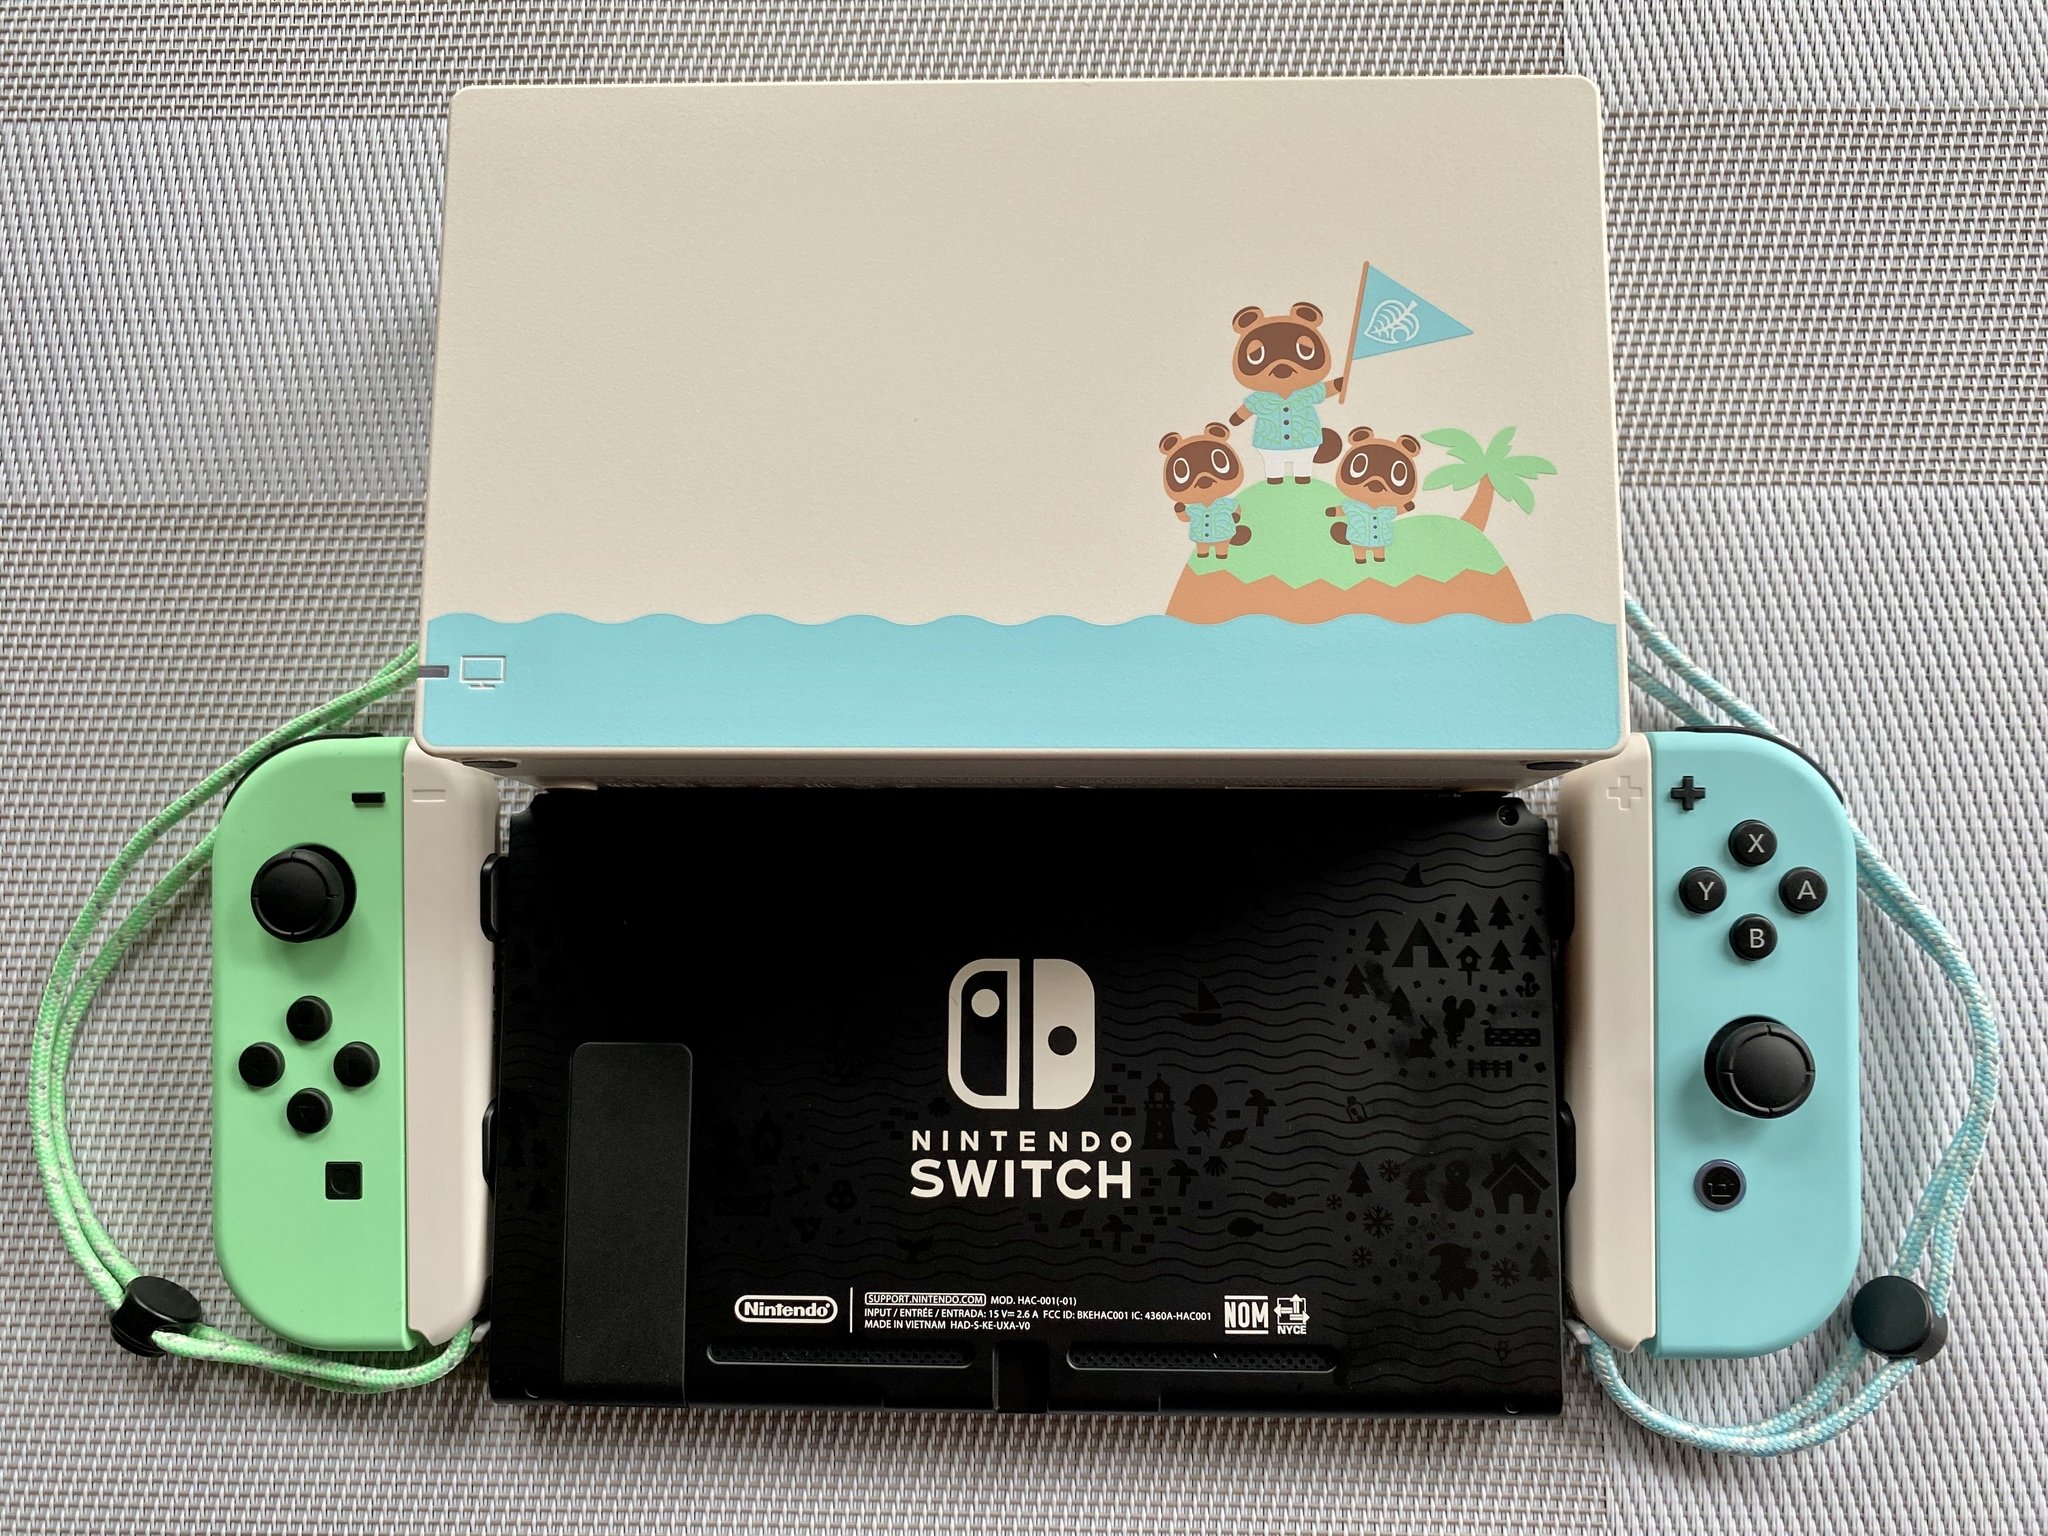 Nintendo switch animal crossing edition